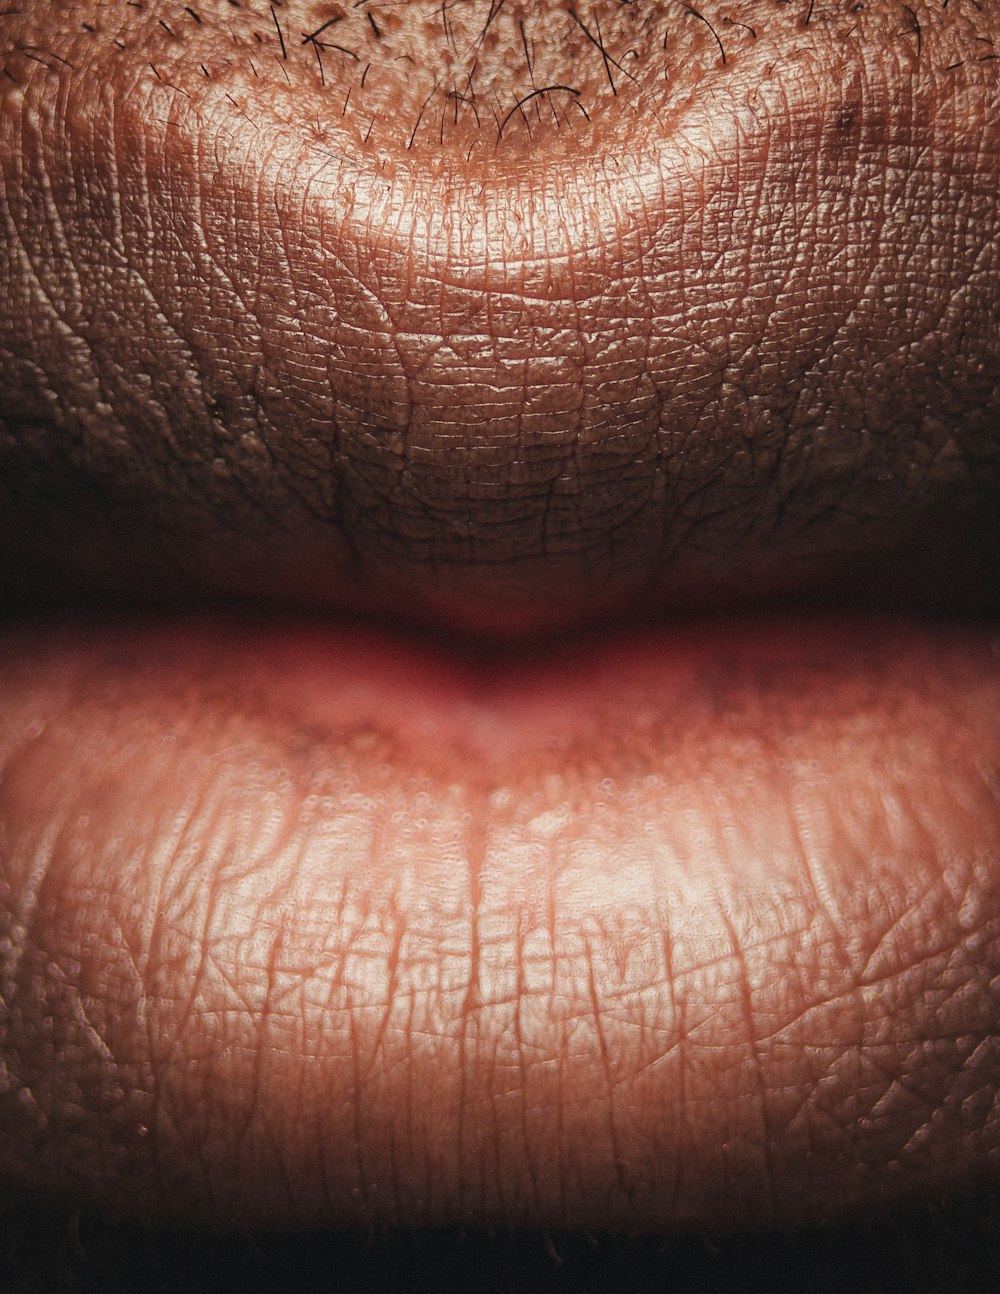 Personen Lippe mit rotem Lippenstift